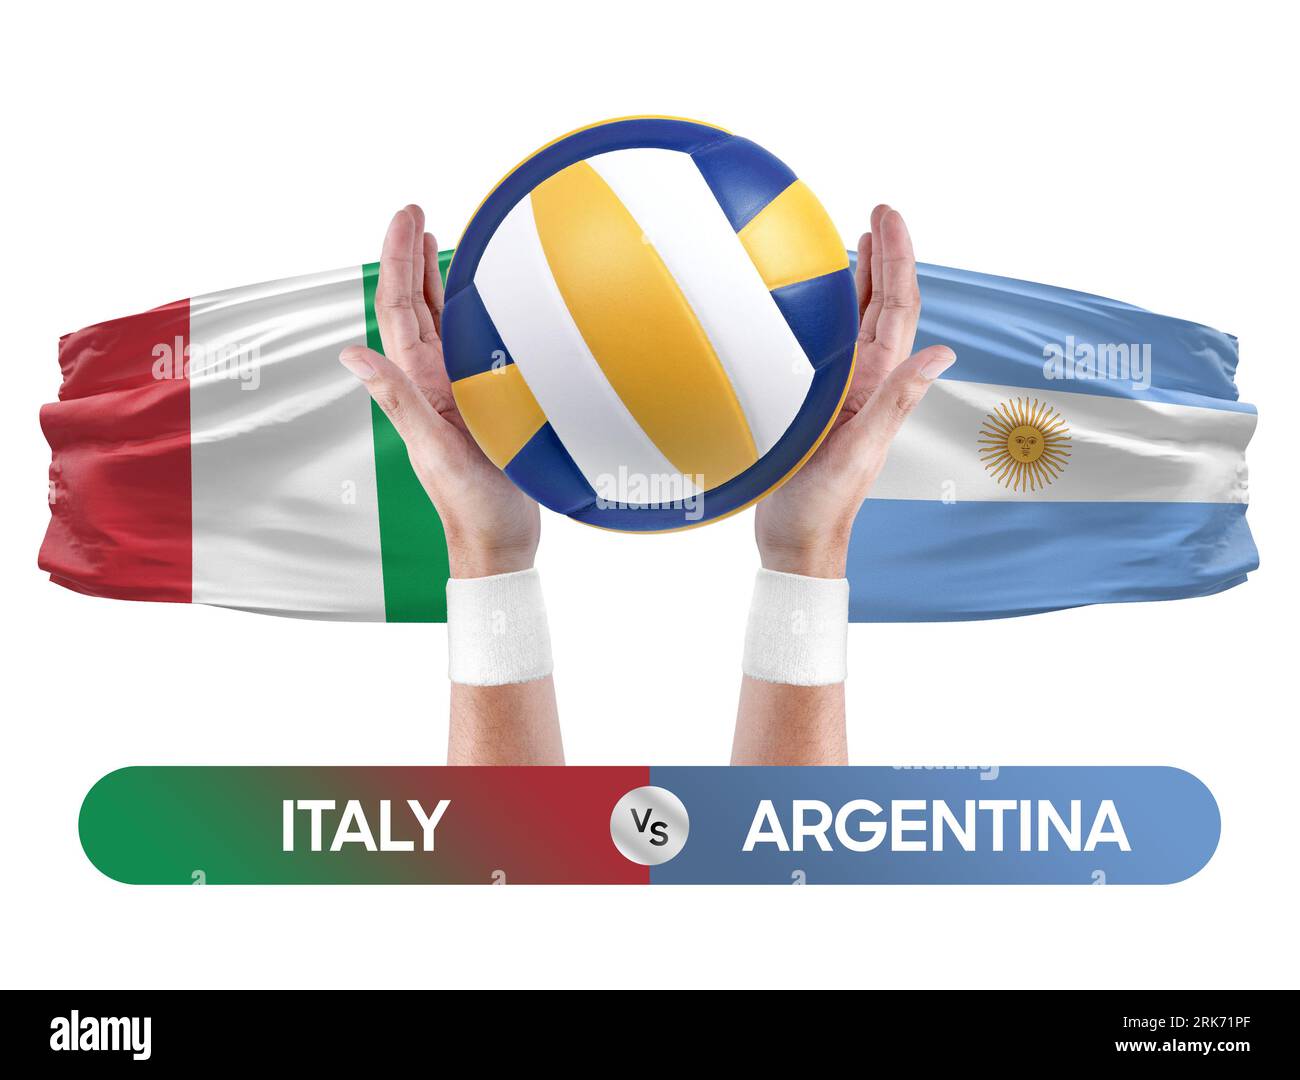 Italien gegen Argentinien Nationalmannschaften Volleyball Volleyball Volleyball Match Competition Concept. Stockfoto